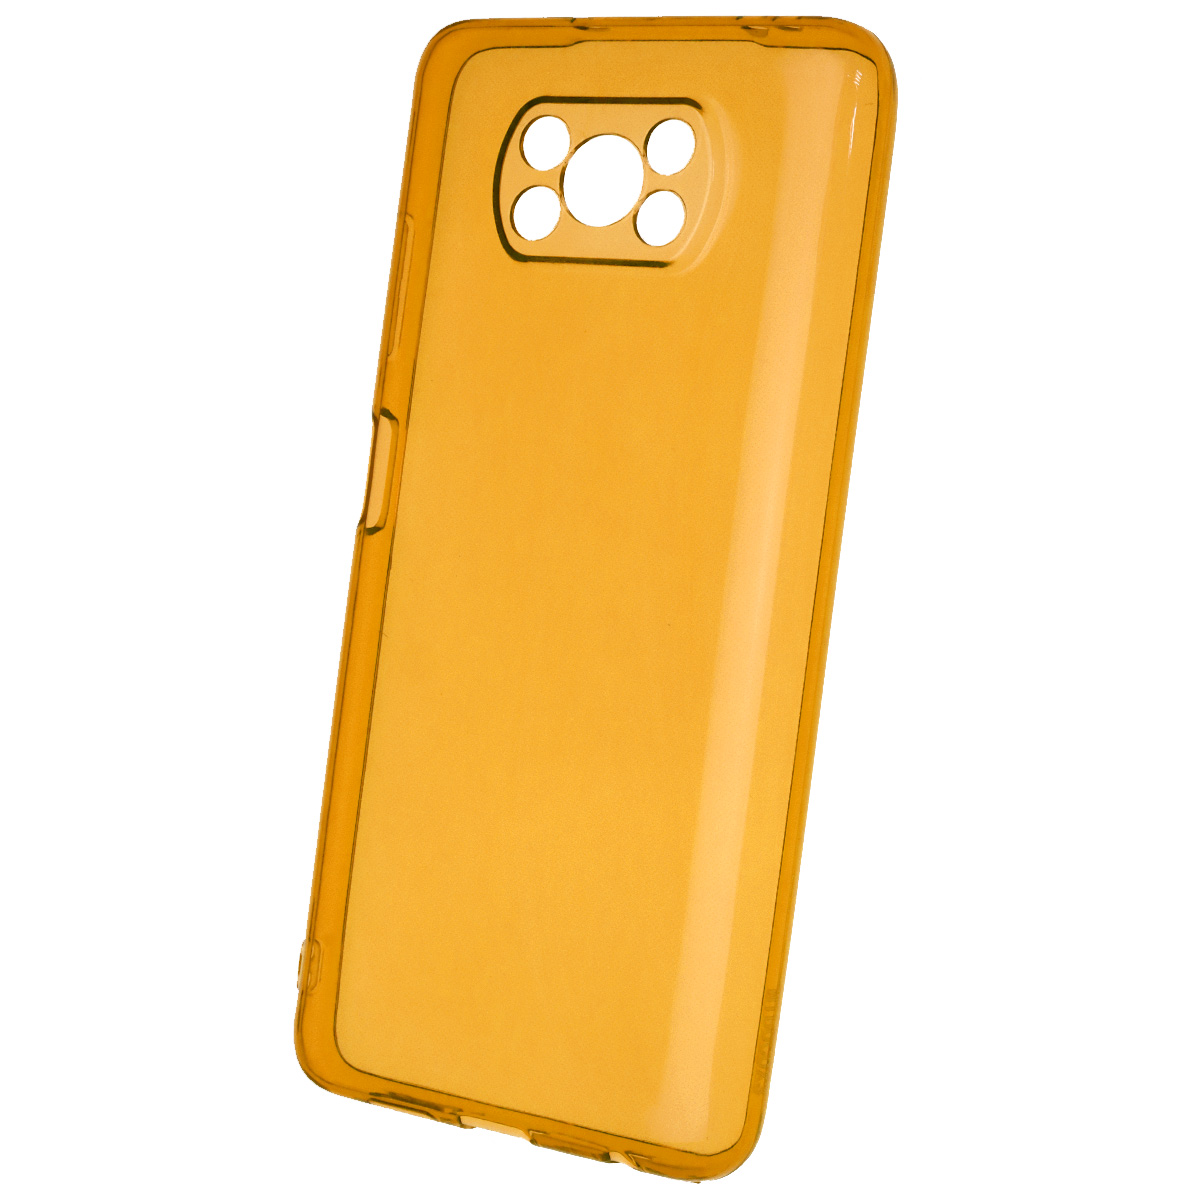 Чехол накладка Clear Case для XIAOMI POCO X3, POCO X3 Pro, силикон 1.5 мм, защита камеры, цвет прозрачно оранжевый